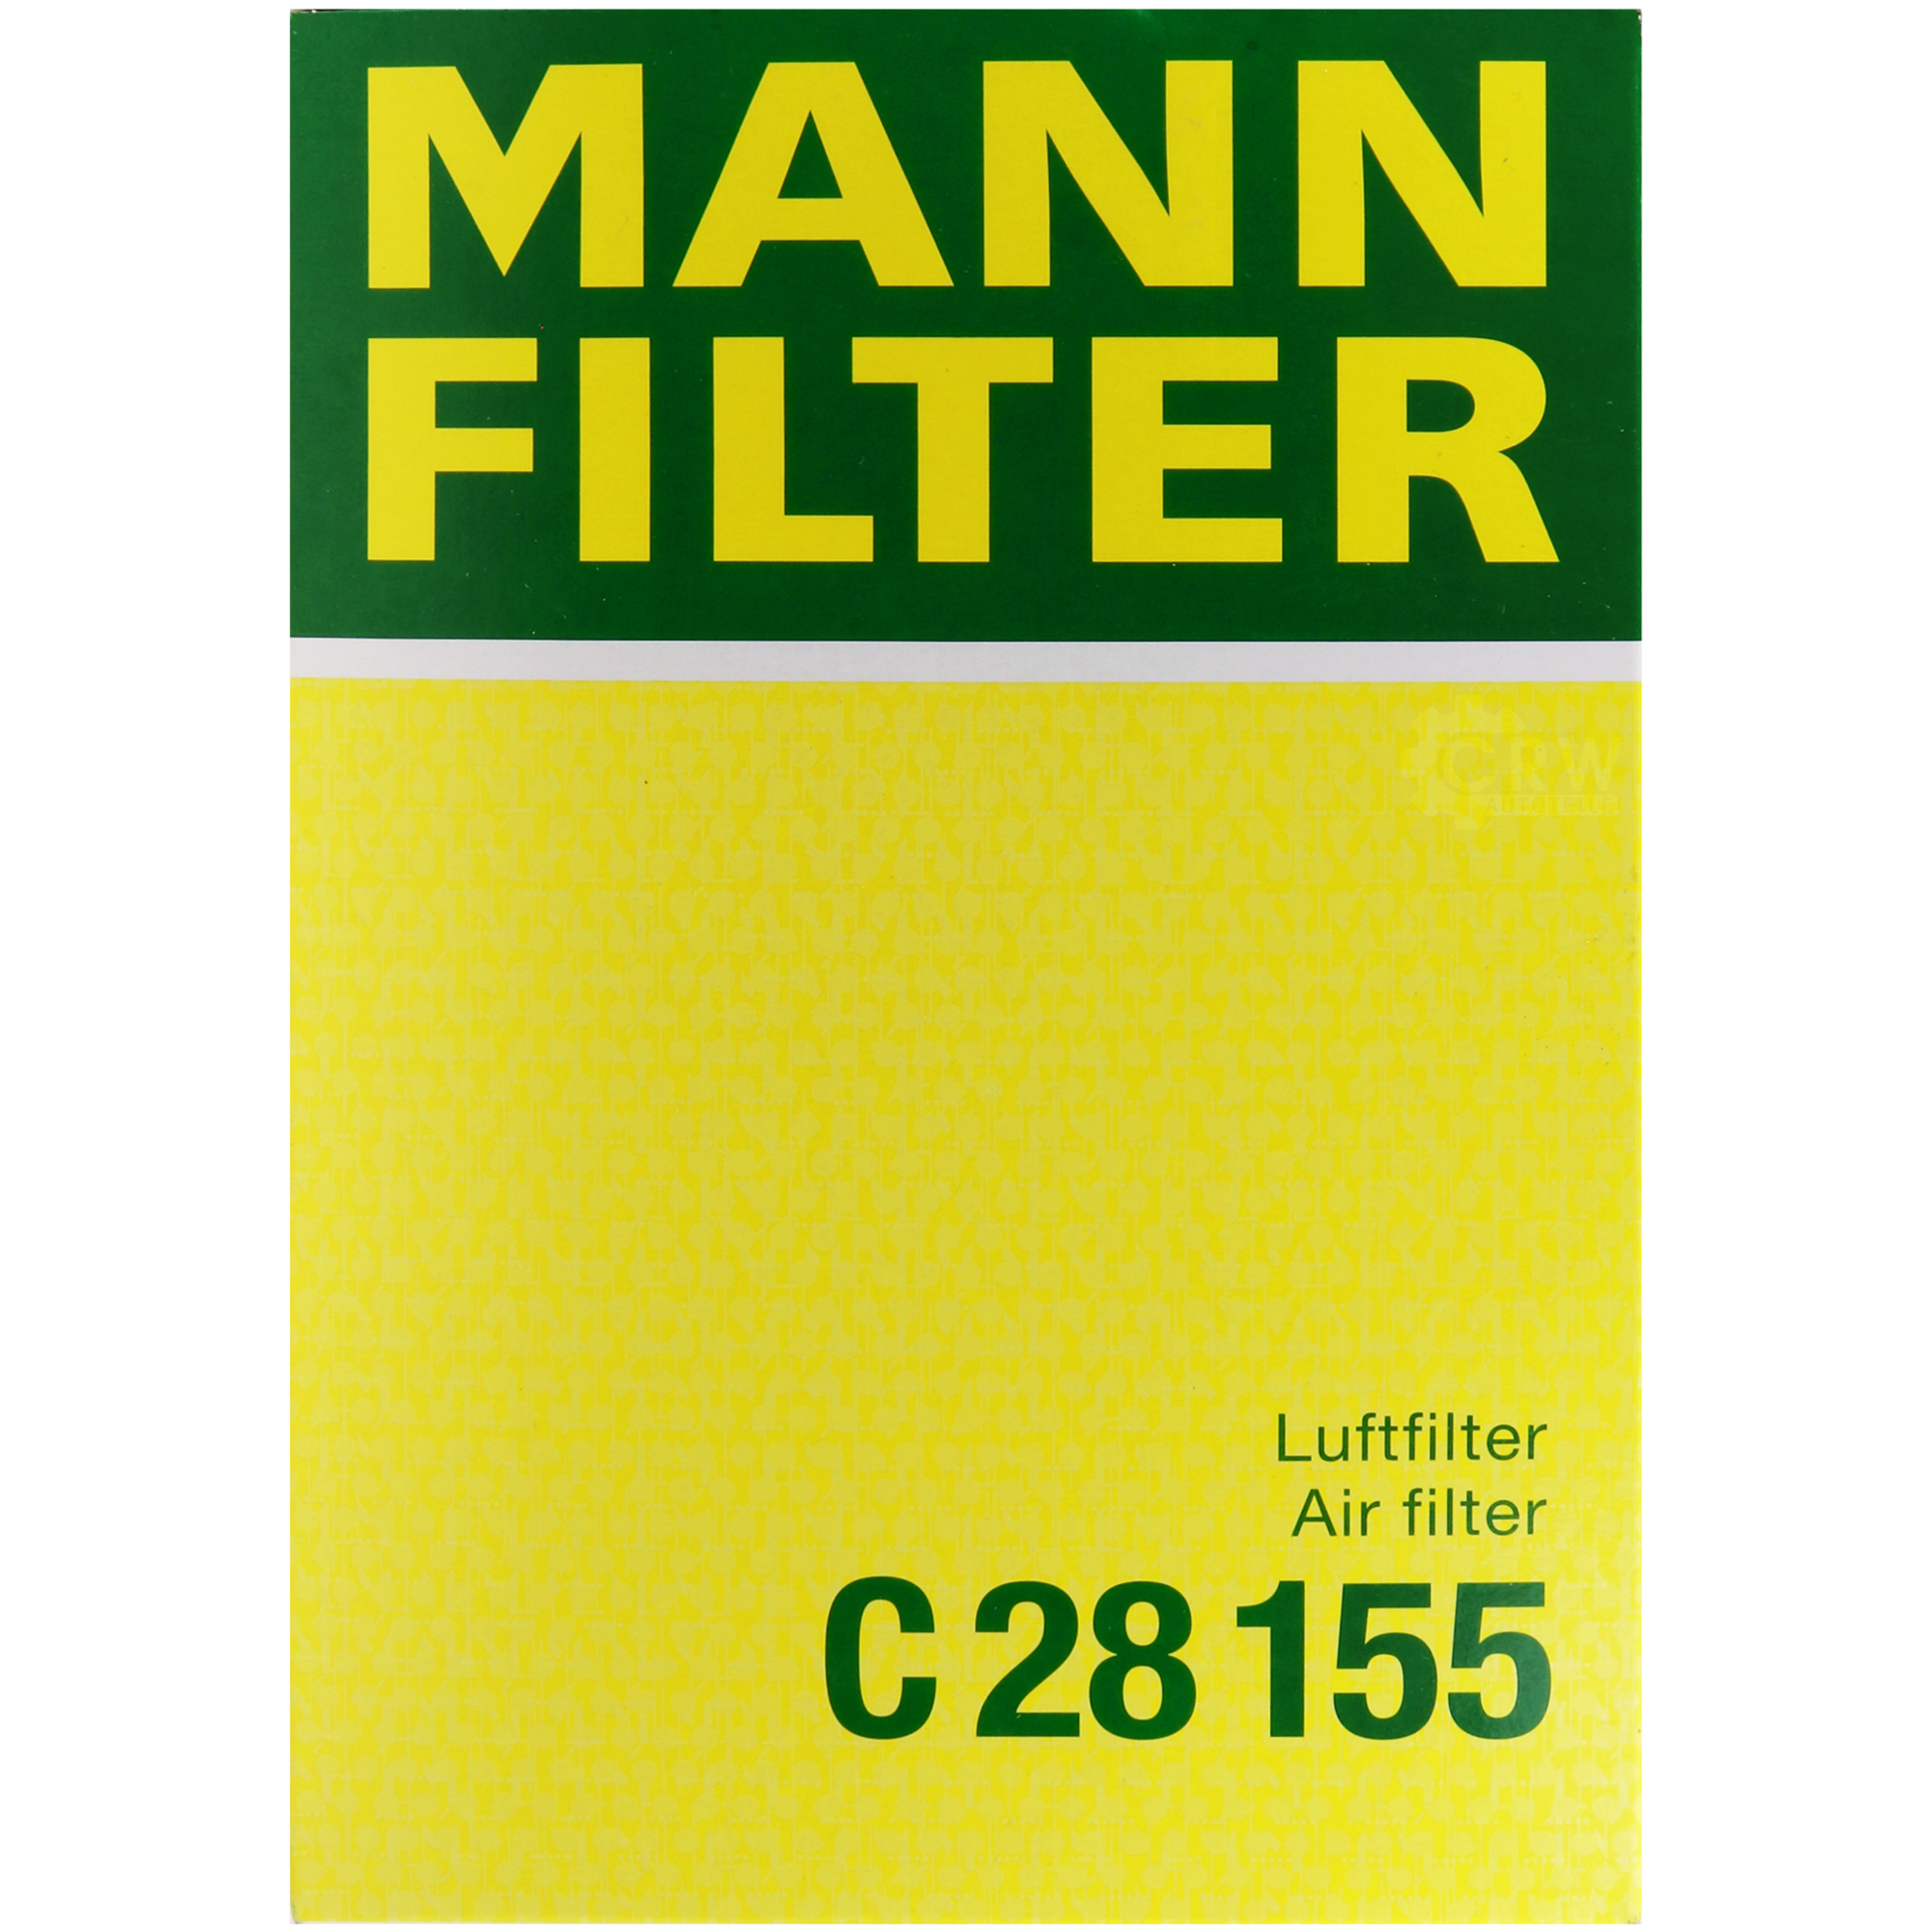 MANN-FILTER Luftfilter für Land Rover Freelander 2 FA_ 2.2 TD4 4x4 LF_ L359